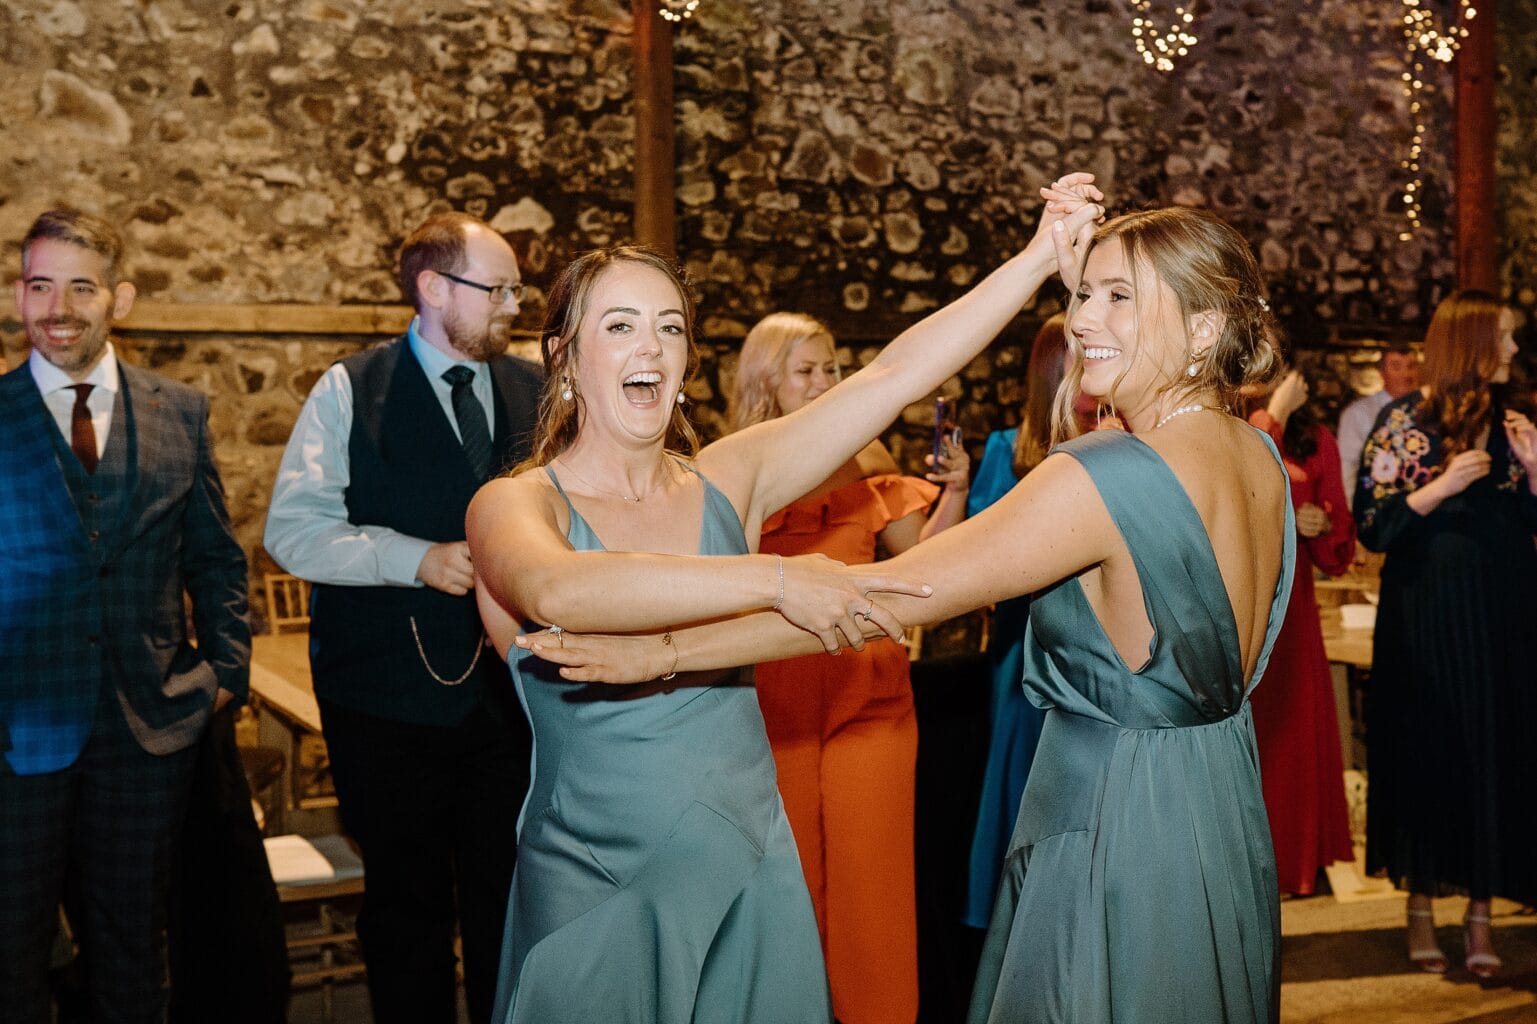 bridesmaids dancing at a wedding reception at a farm wedding venue near glasgow scotland